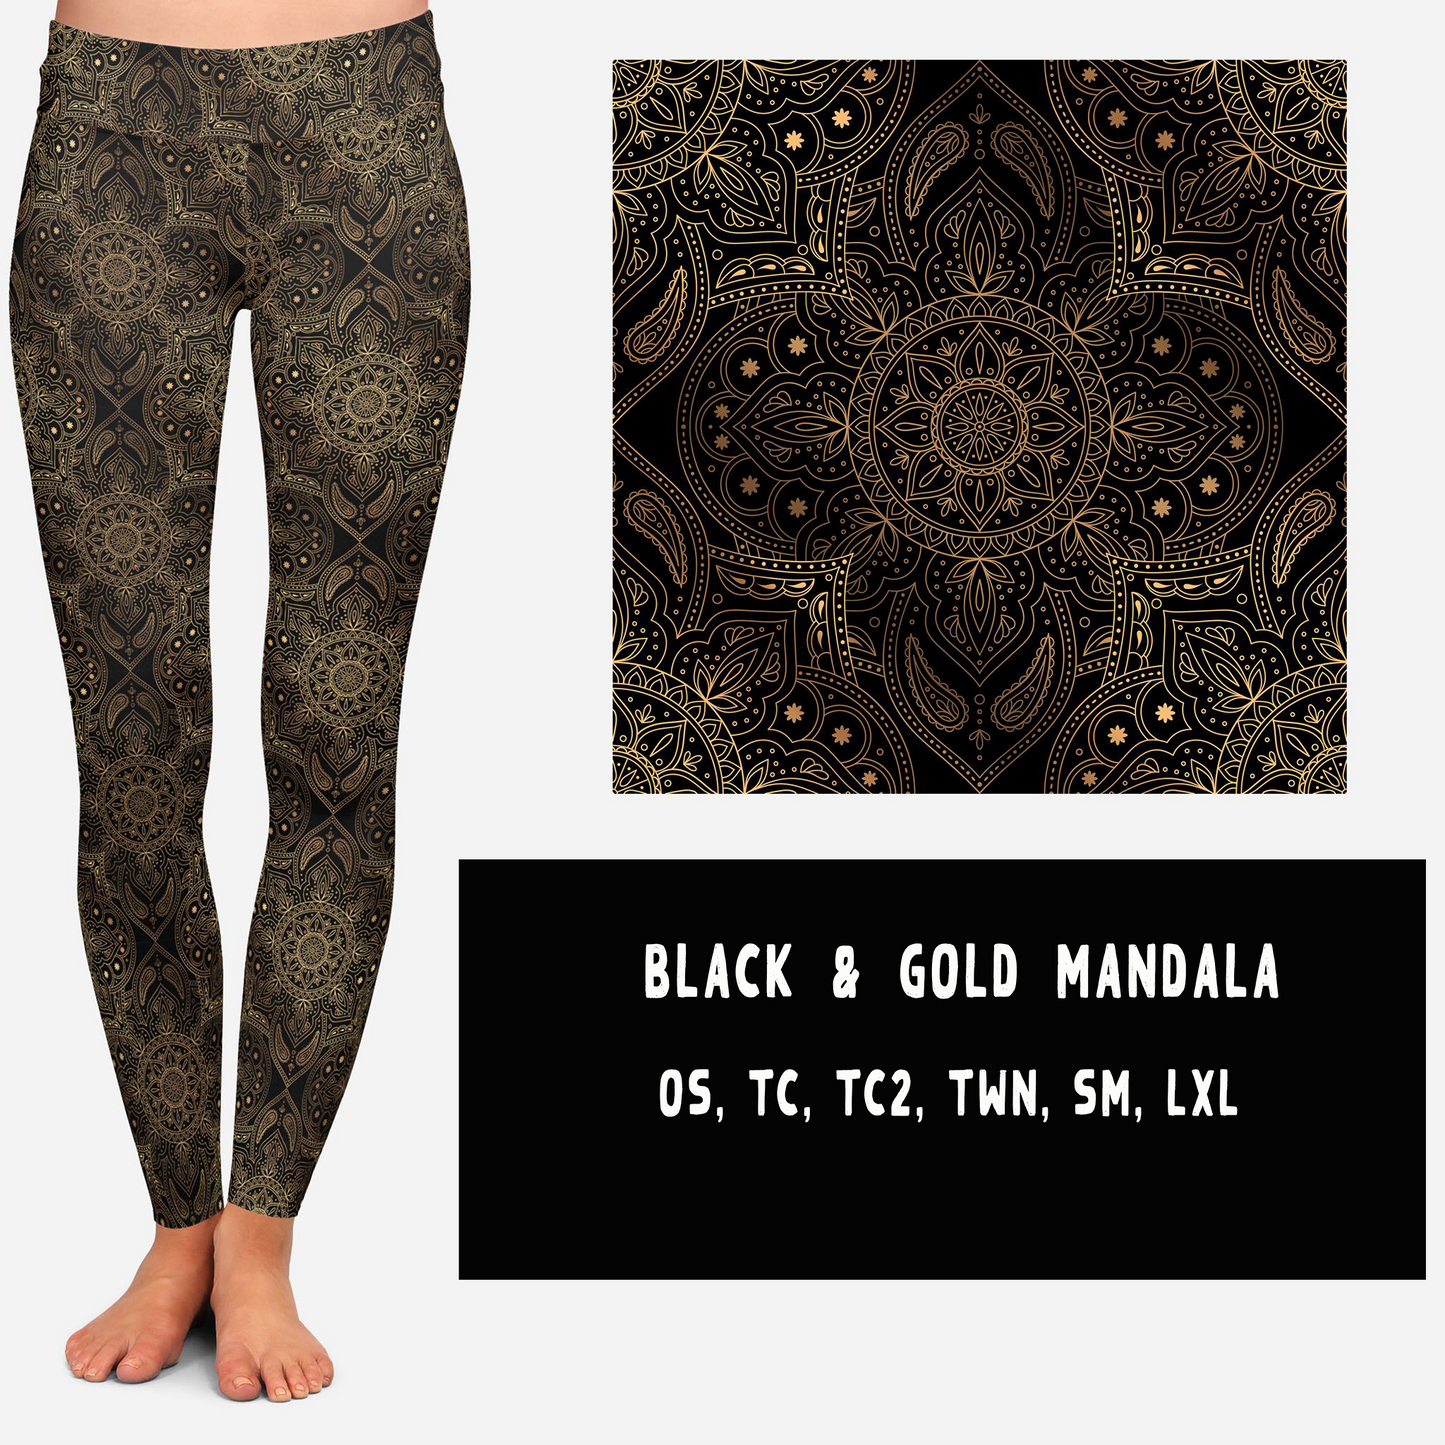 BLACK & GOLD MANDALA